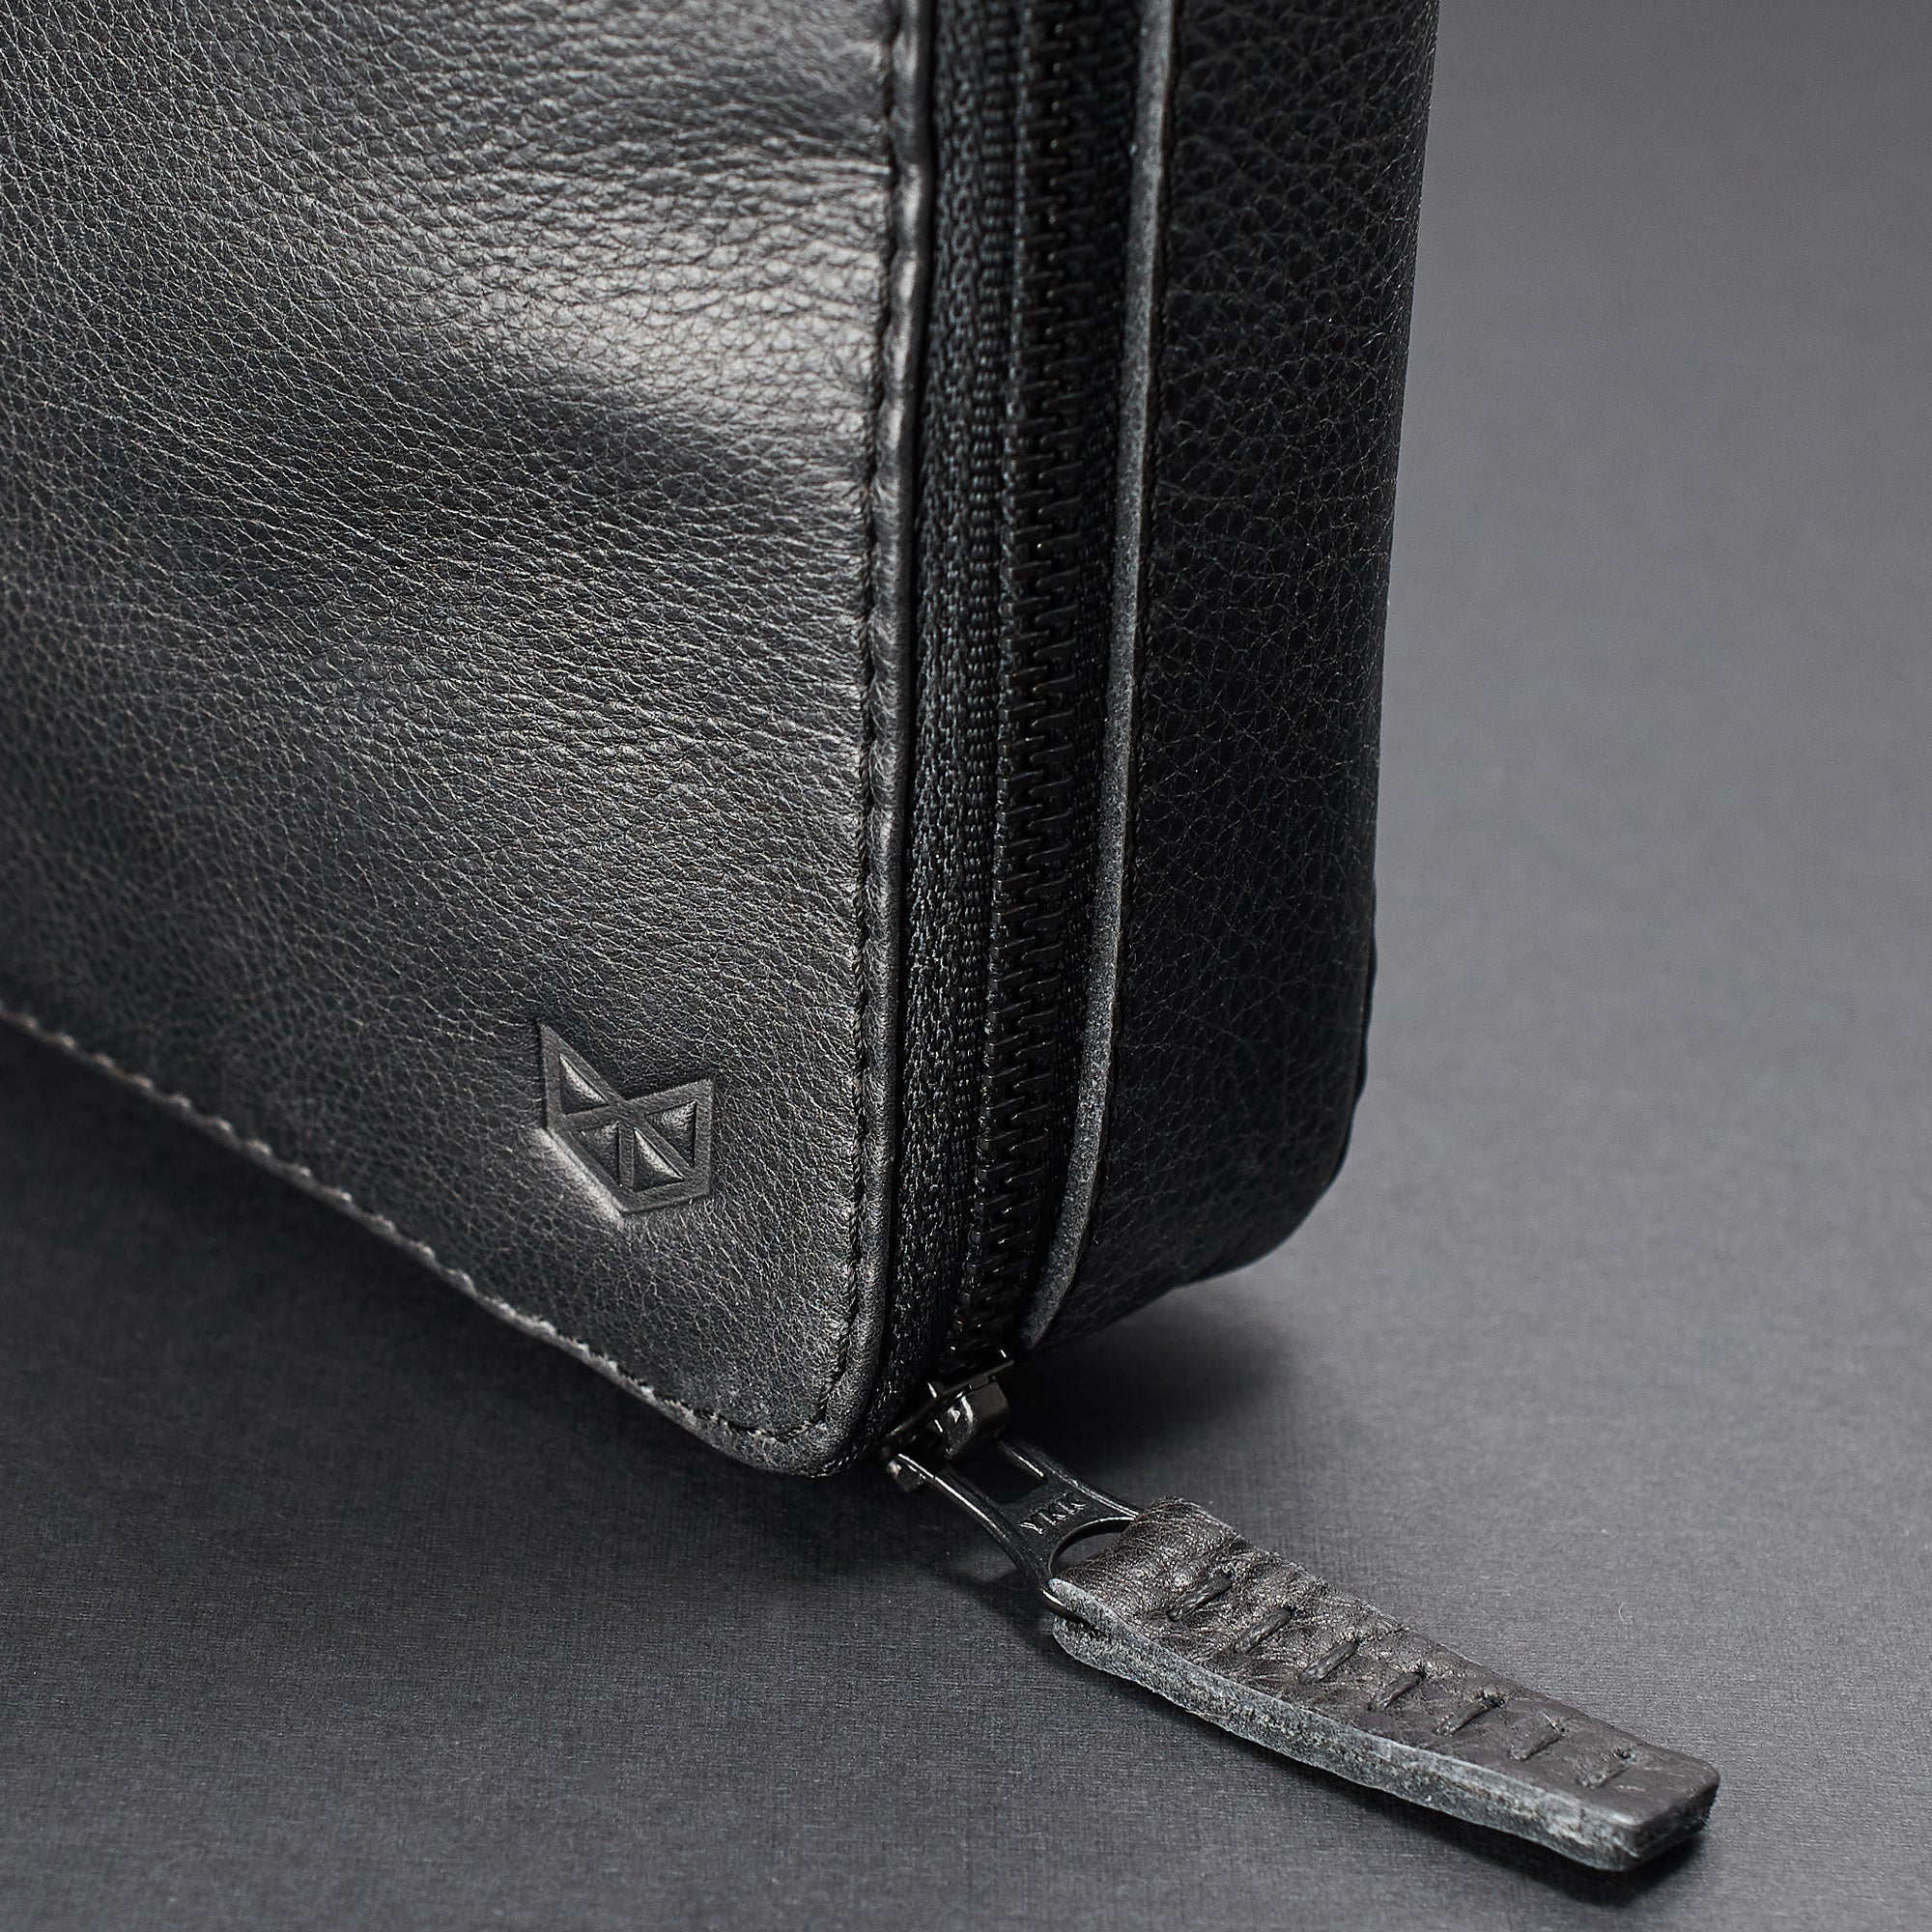 Metallic YKK zippers. Black tech gear zipper bag by Capra Leather